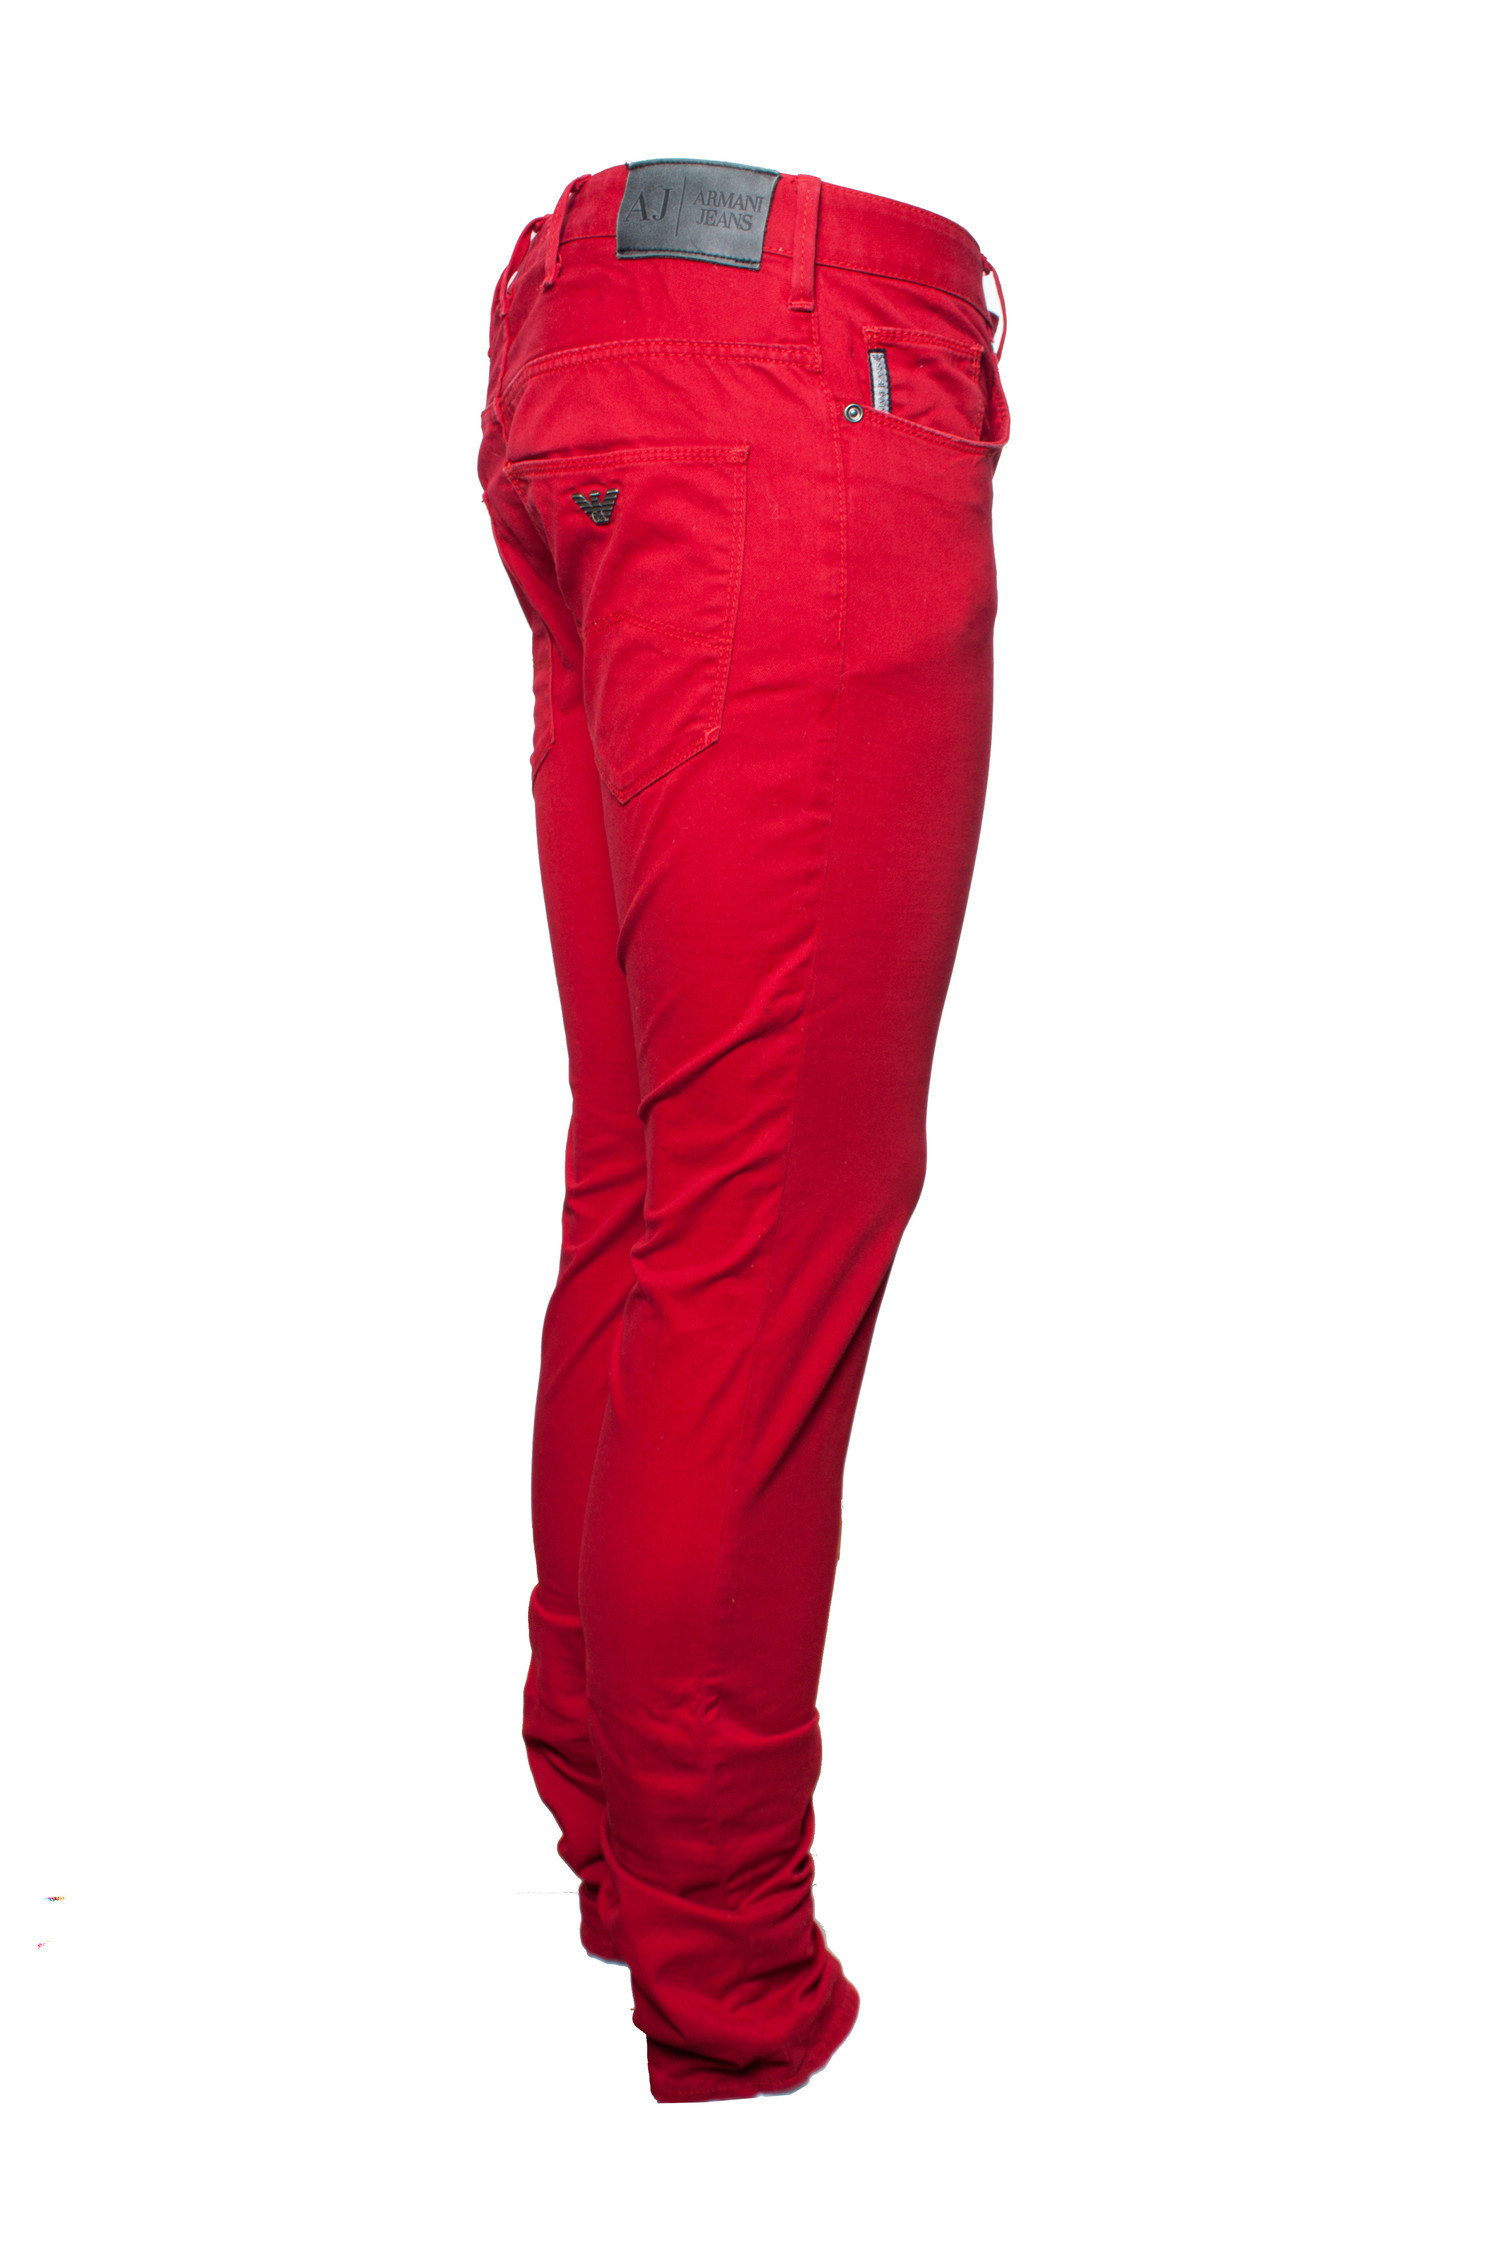 Armani Jeans, Red jeans in size W29/S. - Unique Designer Pieces